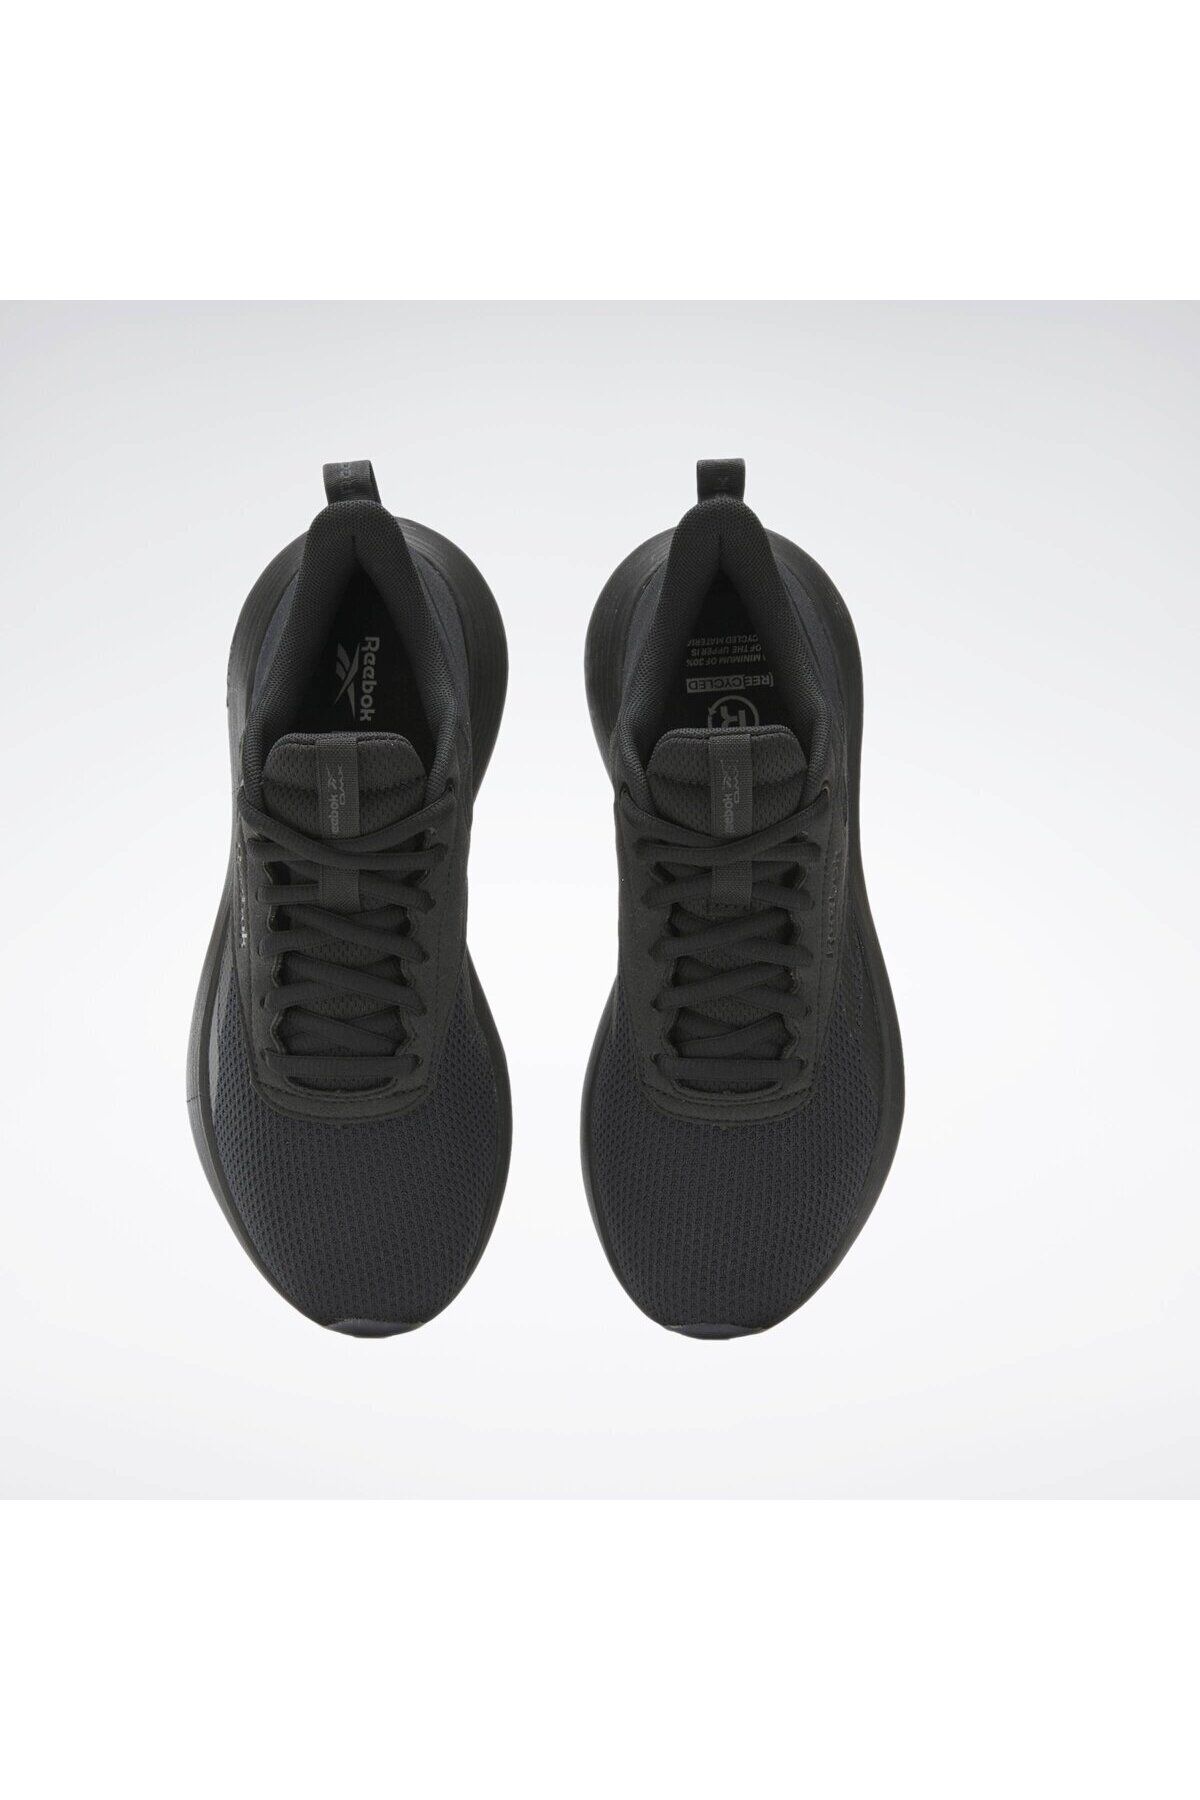 Reebok DMX COMFORT + کفش های زن سیاه در حال راه رفتن